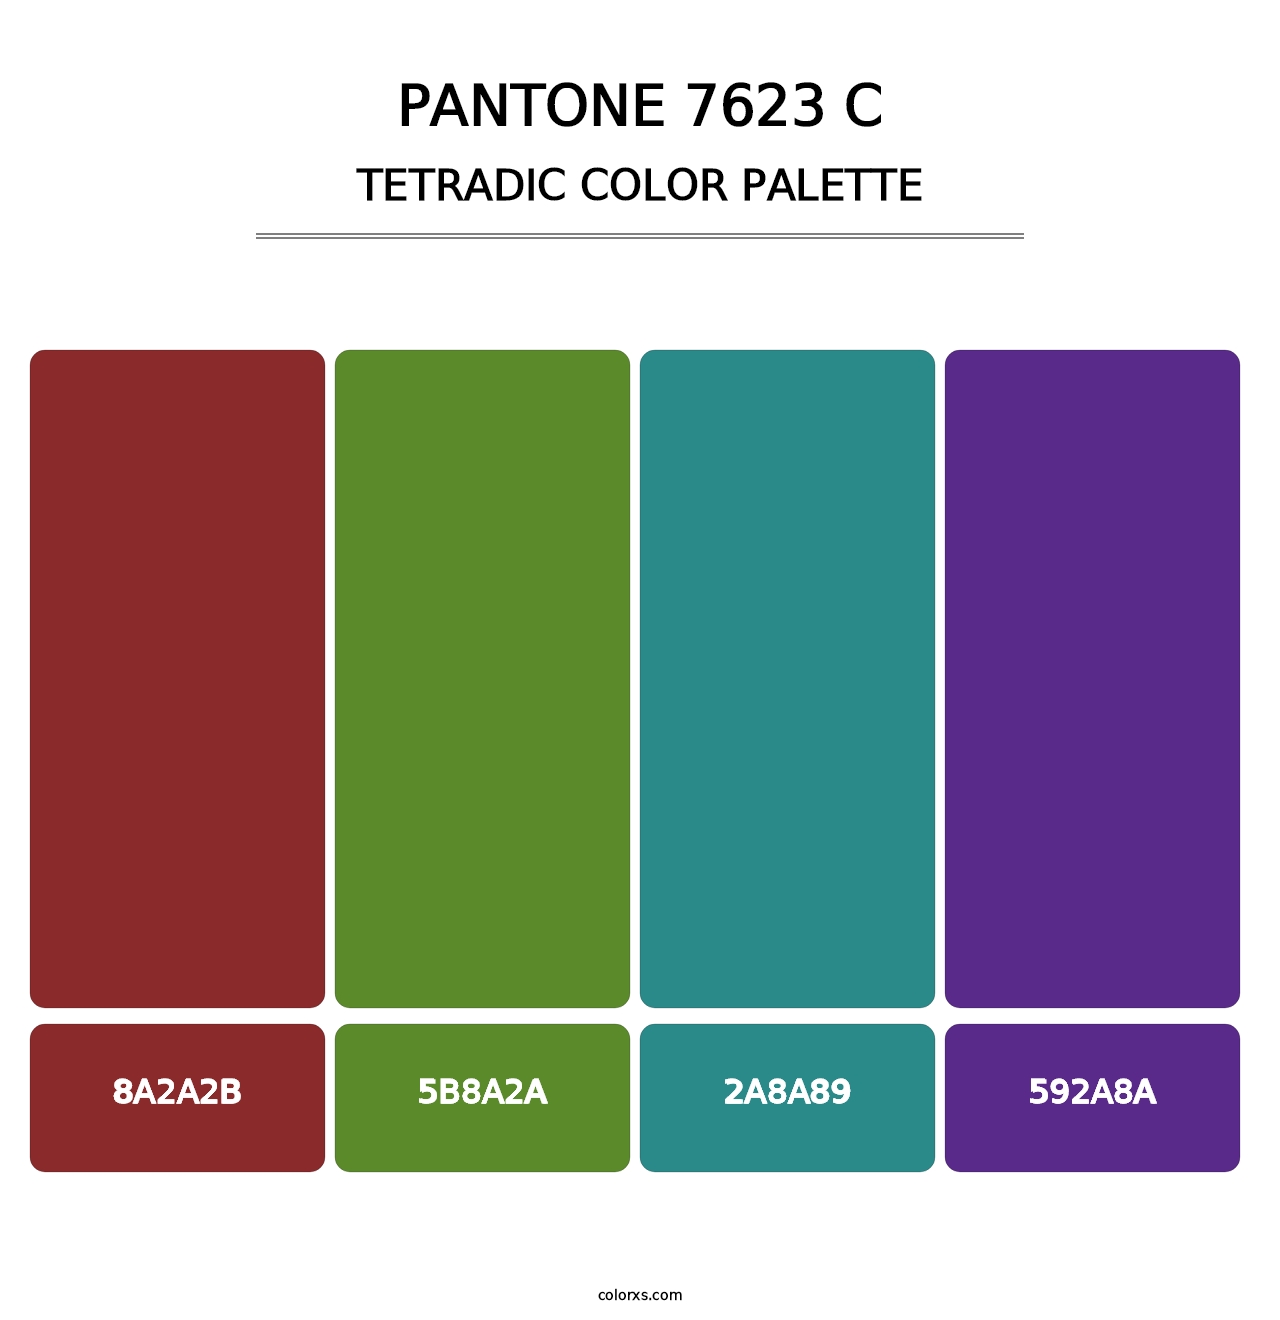 PANTONE 7623 C - Tetradic Color Palette